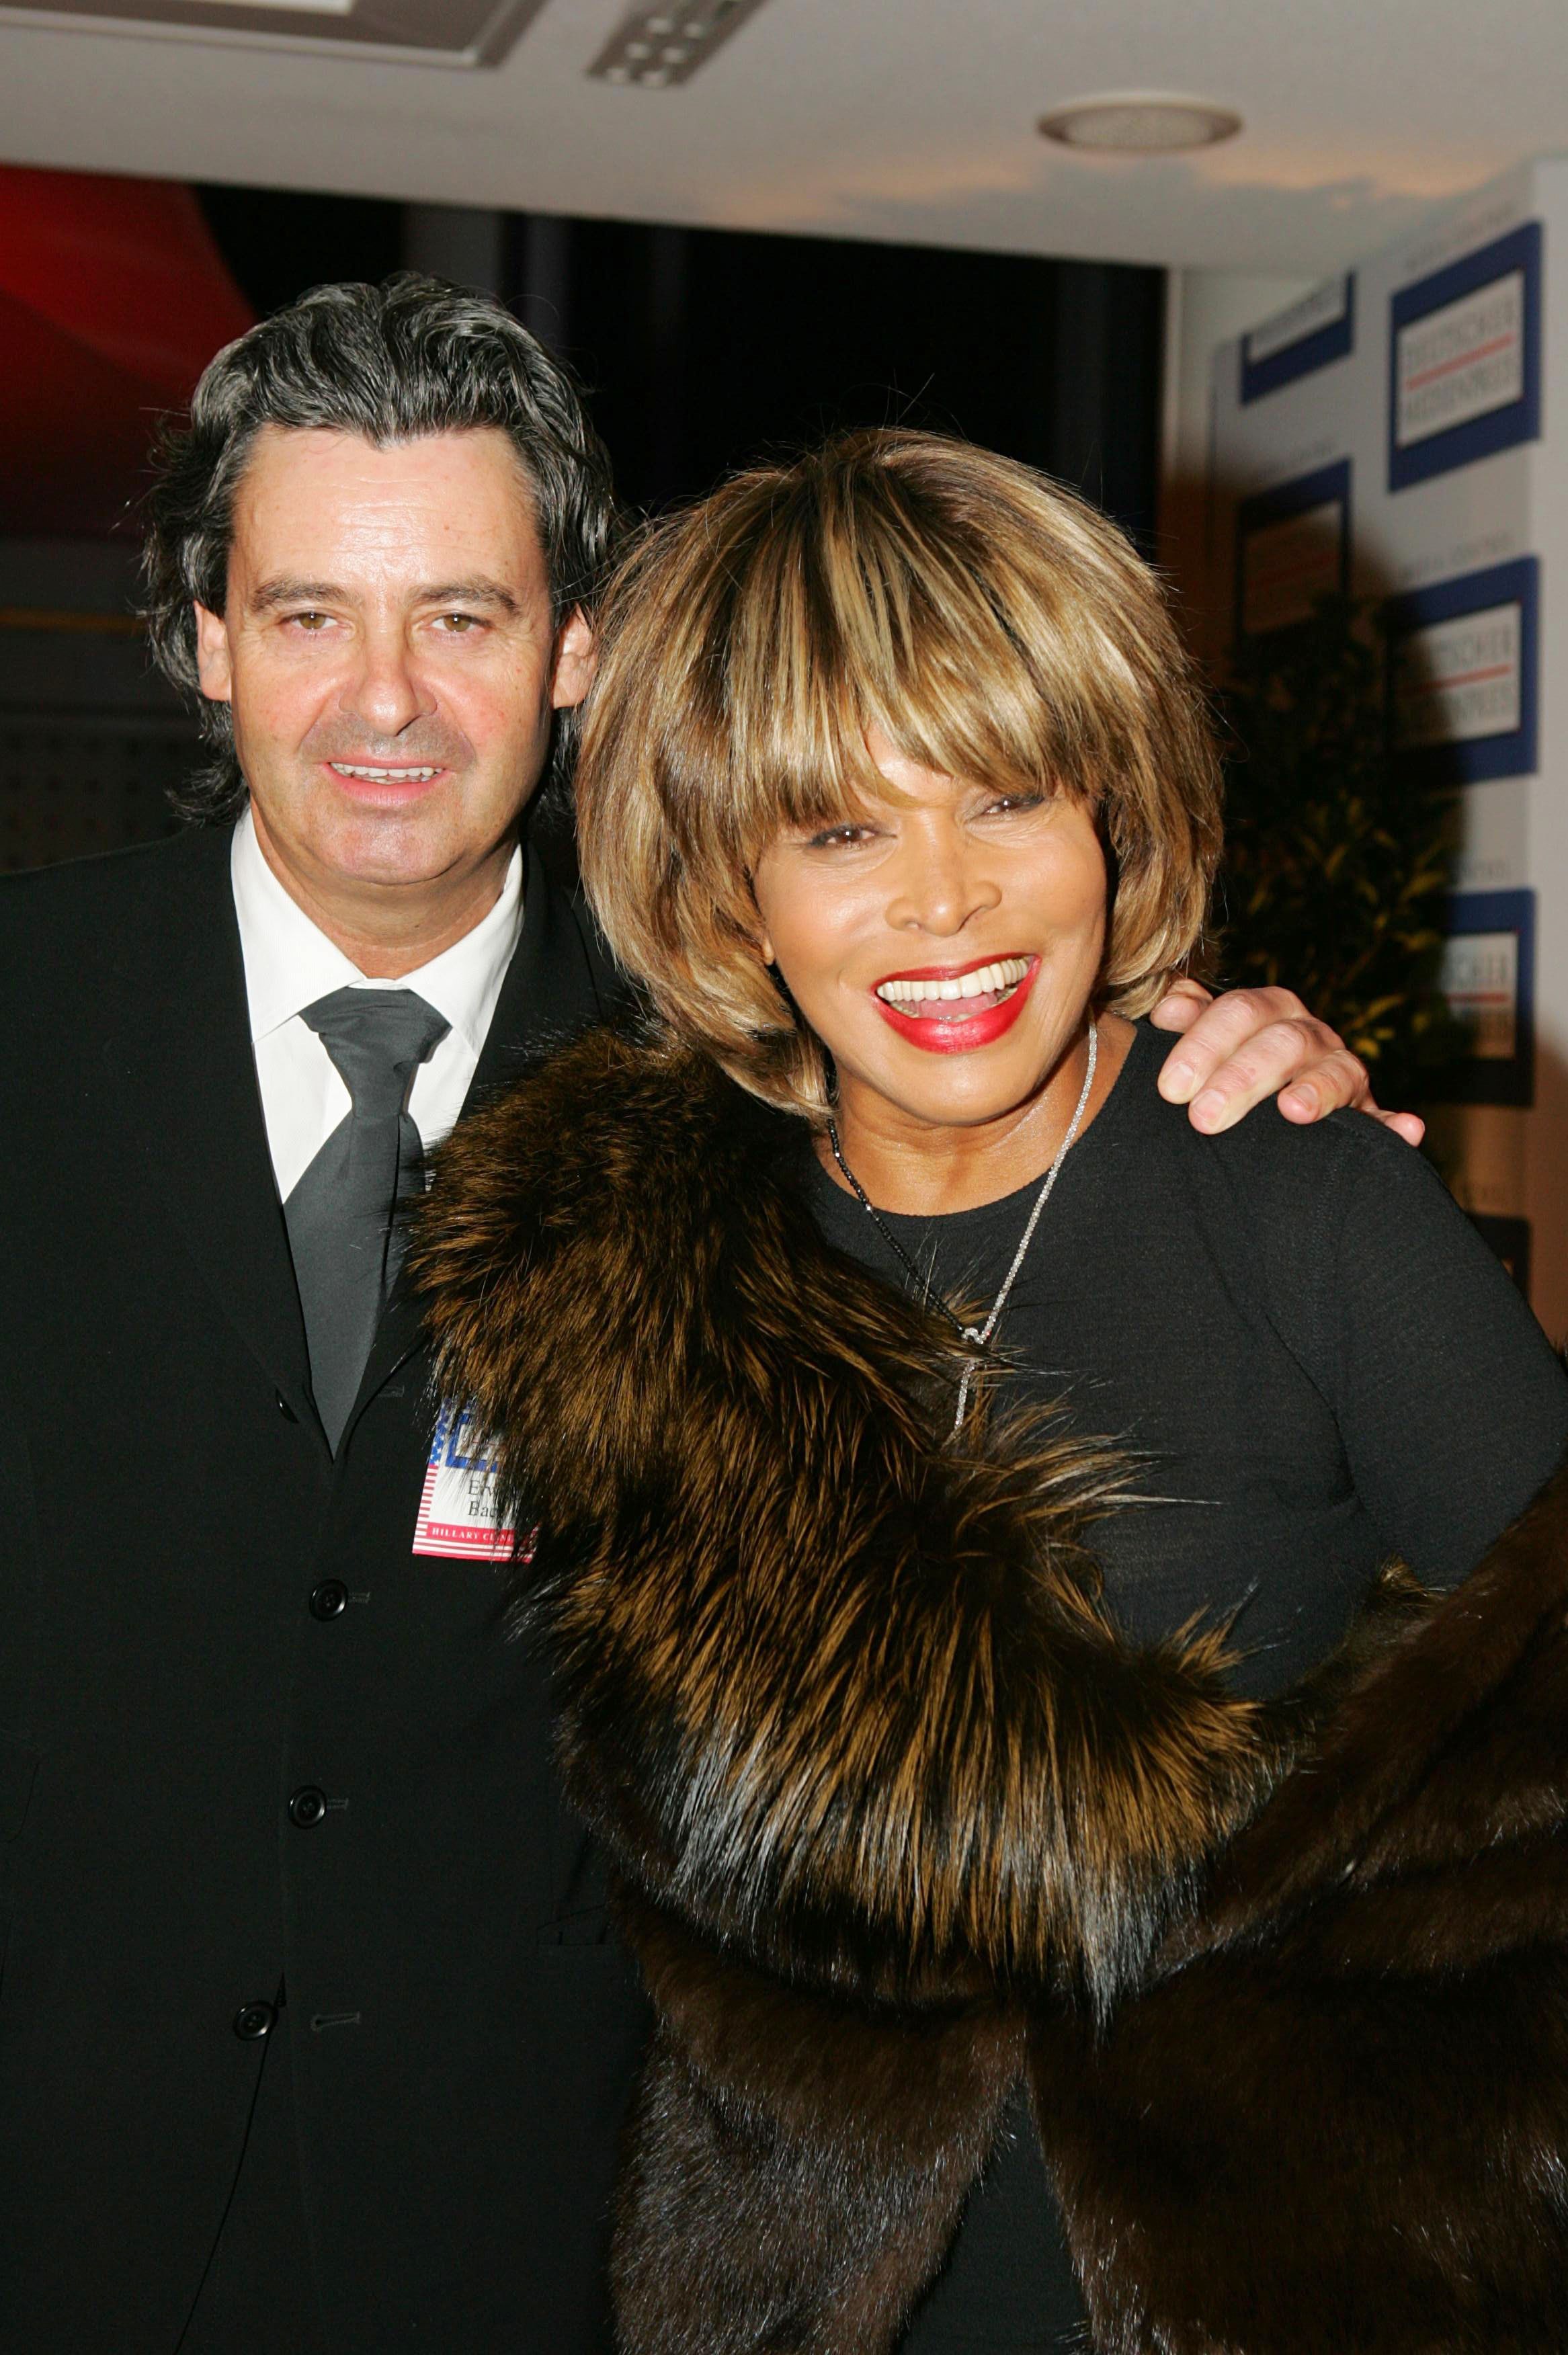 Erwin Bach and Tina Turner at "Deutschen Medienpreis 2005" on February 13, 2005 | Photo: Franziska Krug/Getty Images